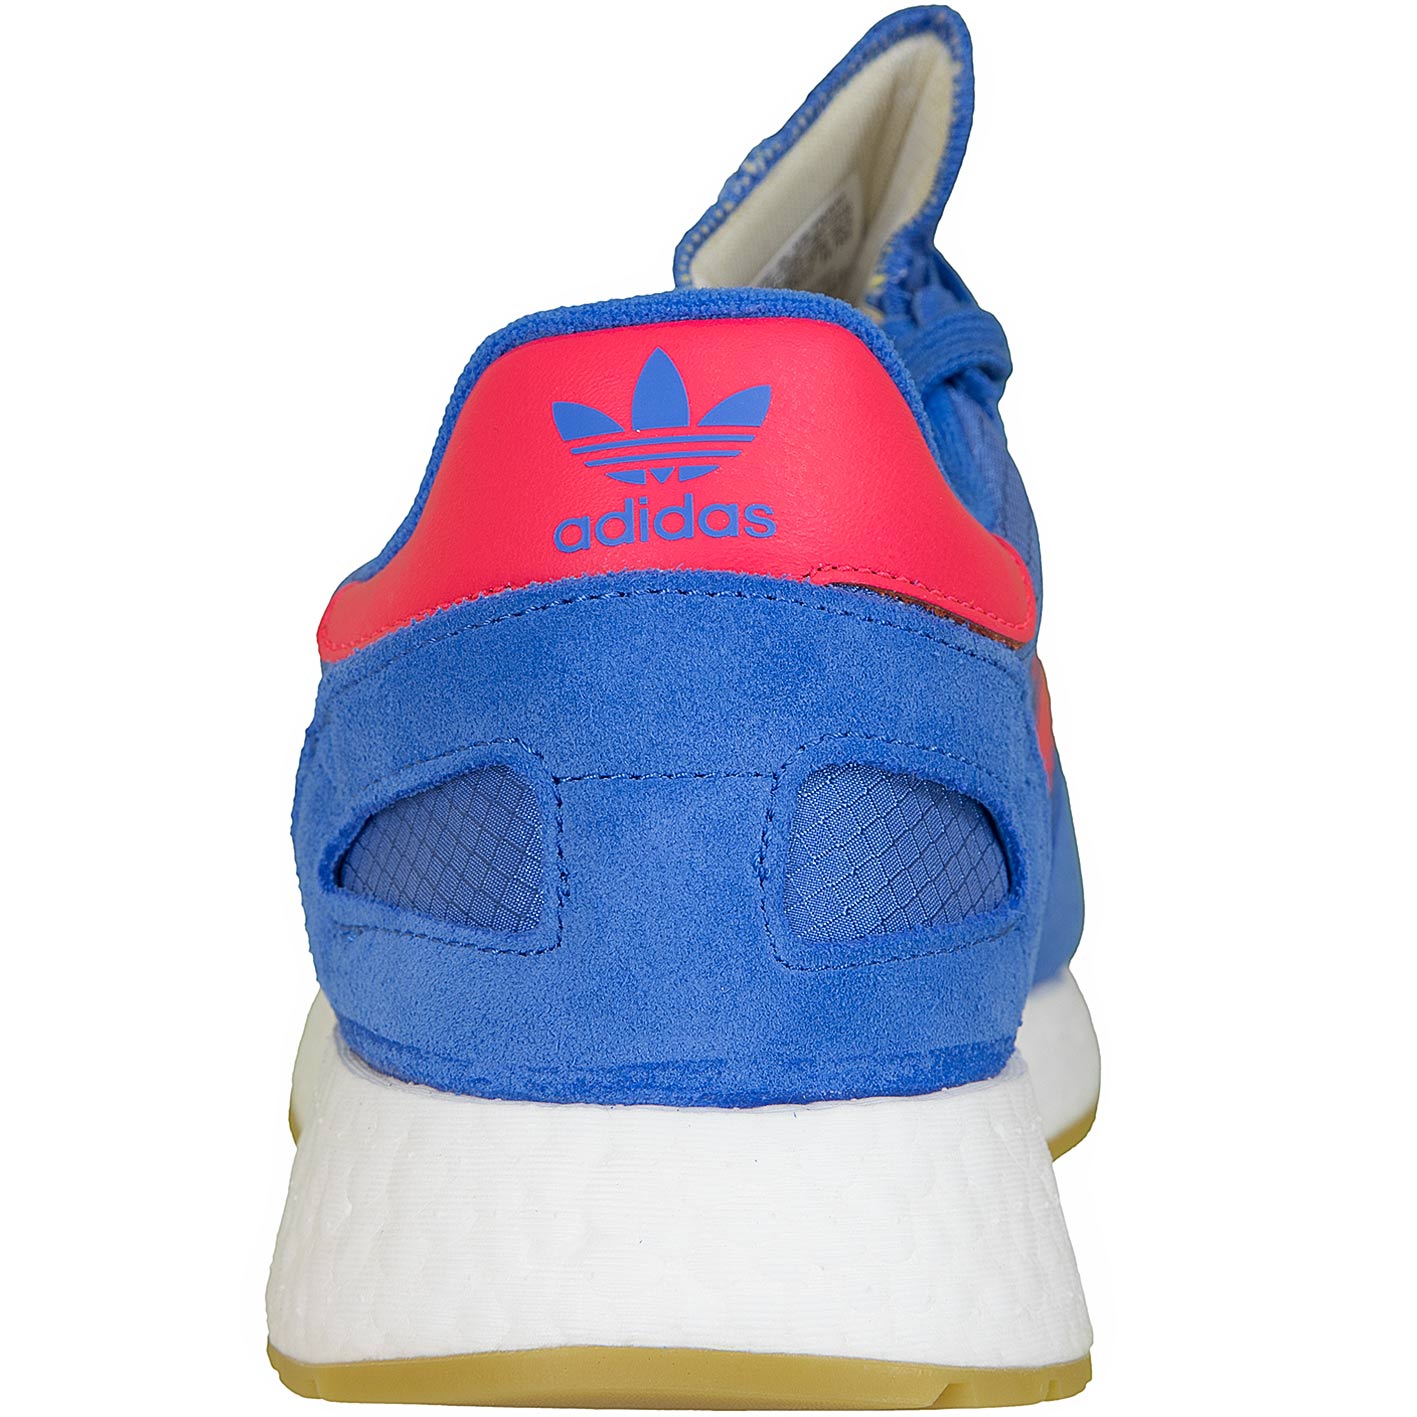 ☆ Adidas Originals Sneaker I-5923 blau/rot - hier bestellen!